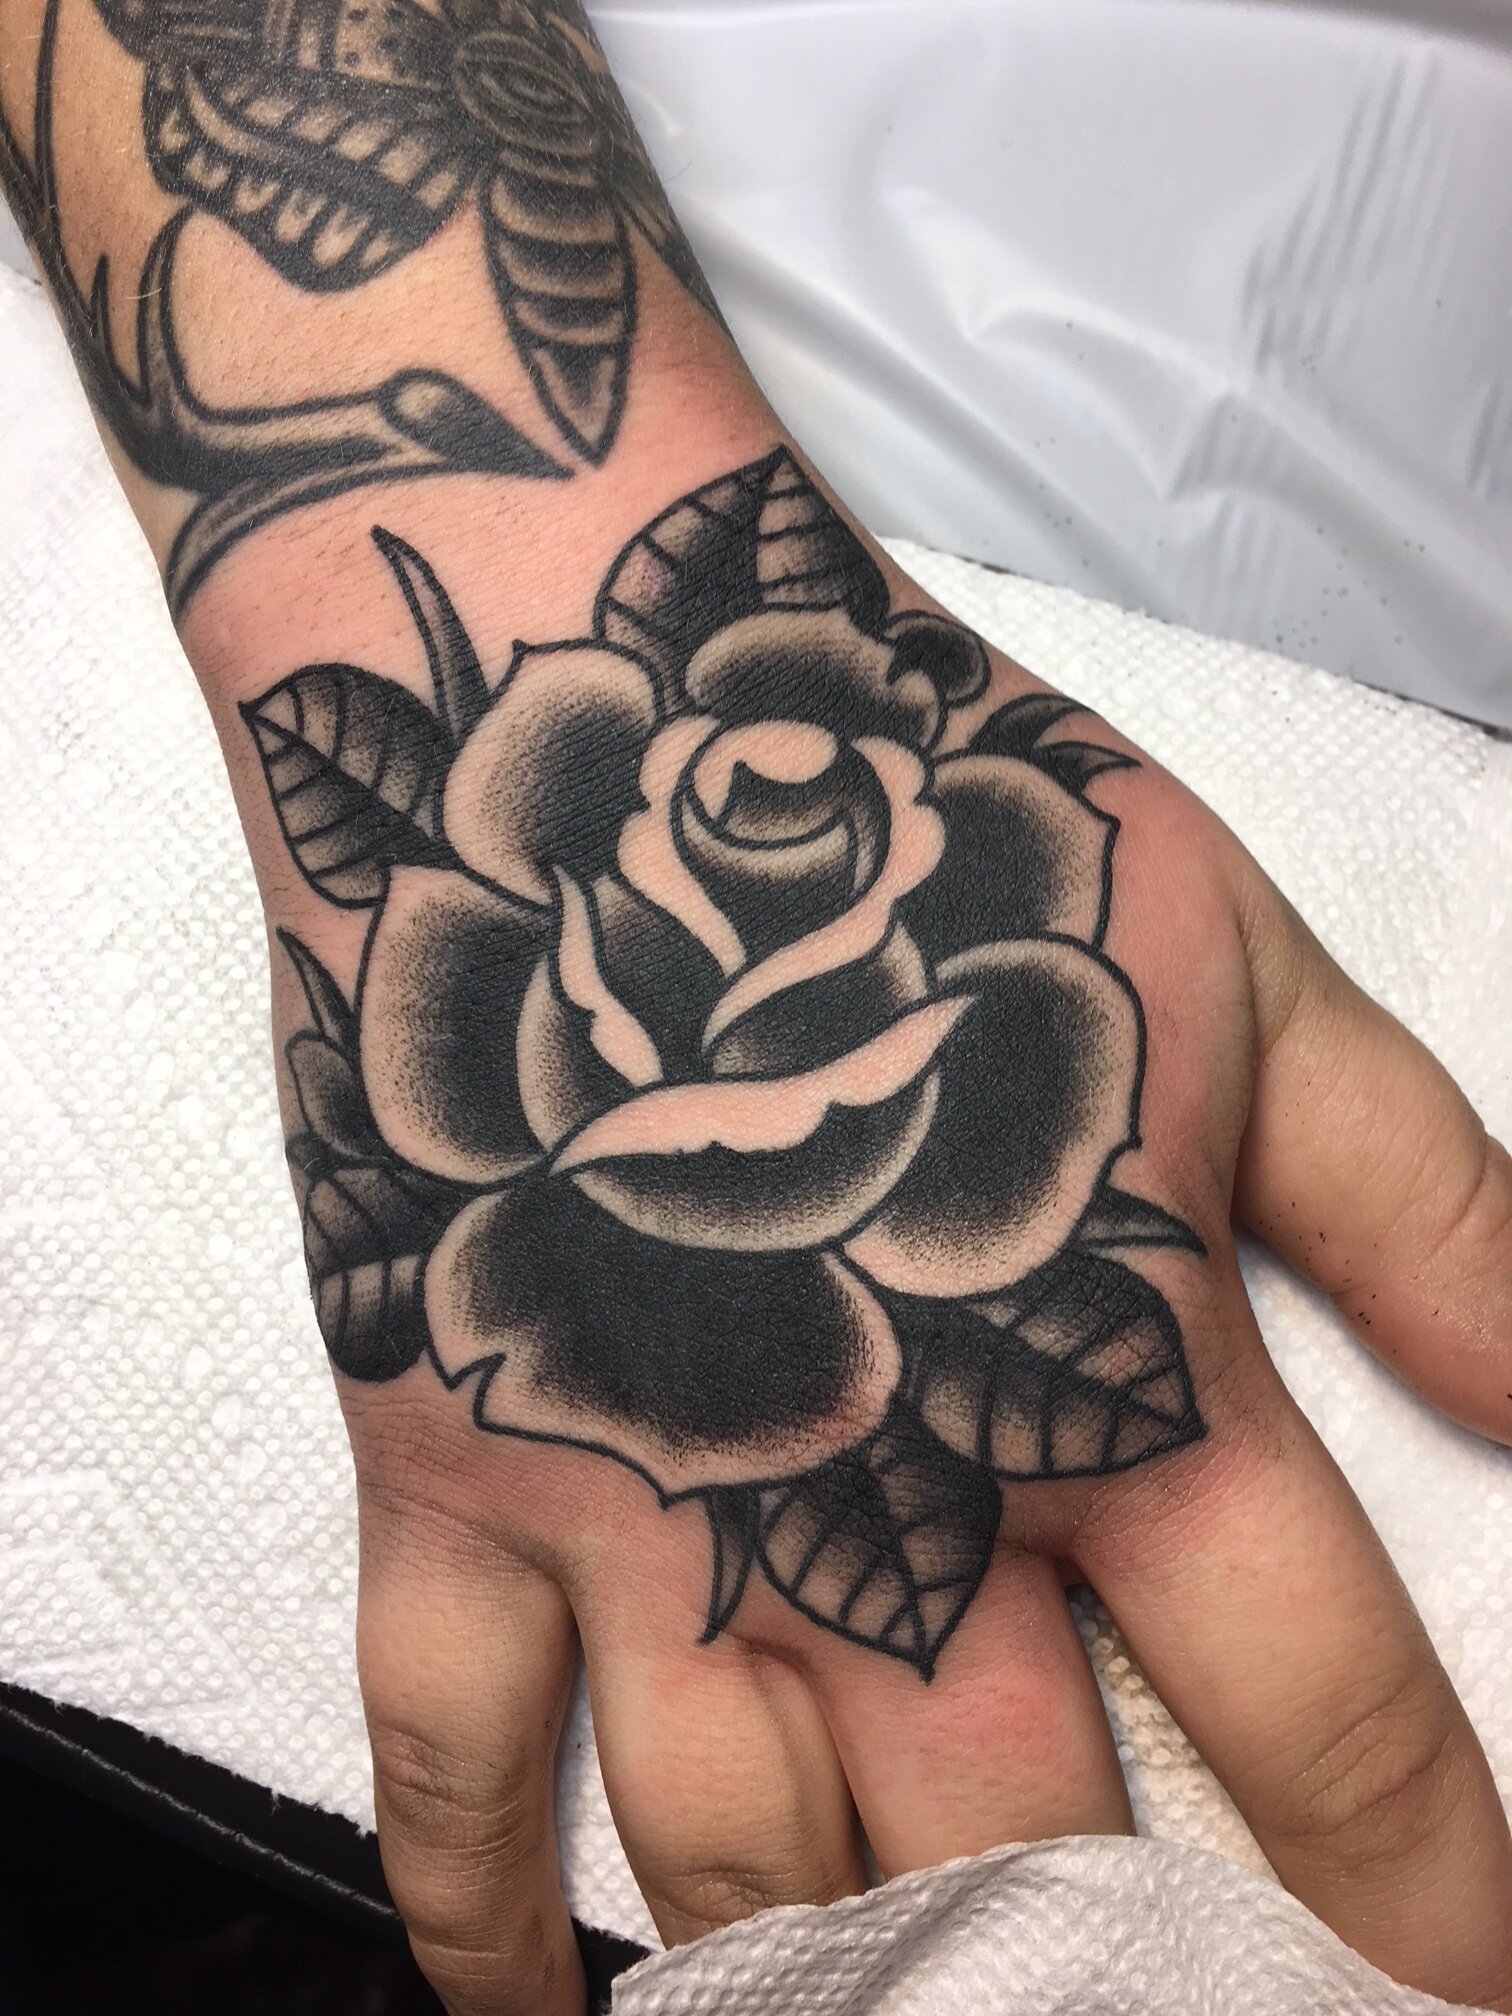 Bold black rose tattoo on hand by Brian Gattis at Southern Star Tattoo in Atlanta, Georgia